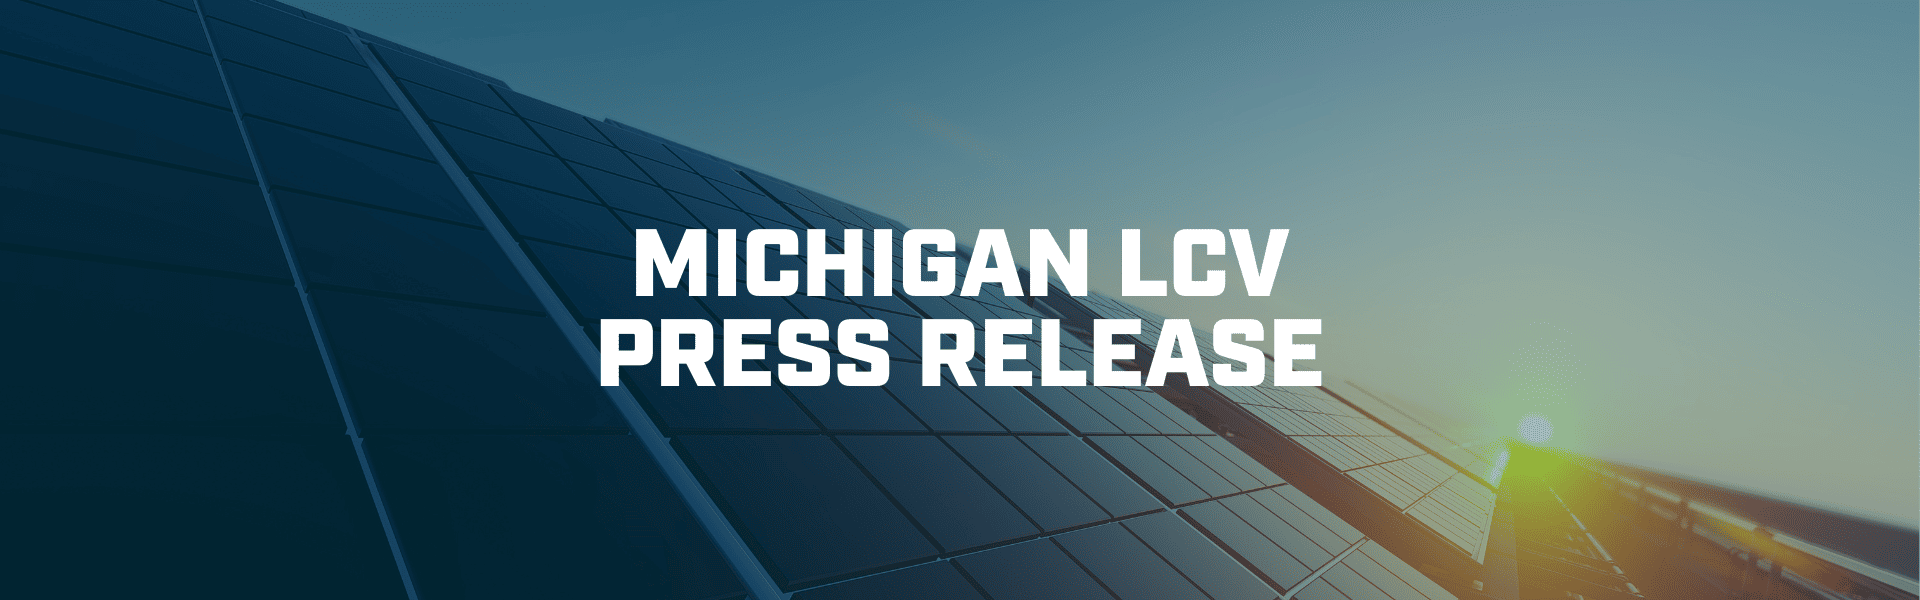 Michigan LCV hosts 11th Annual Gala, “Our Clean Energy Future”